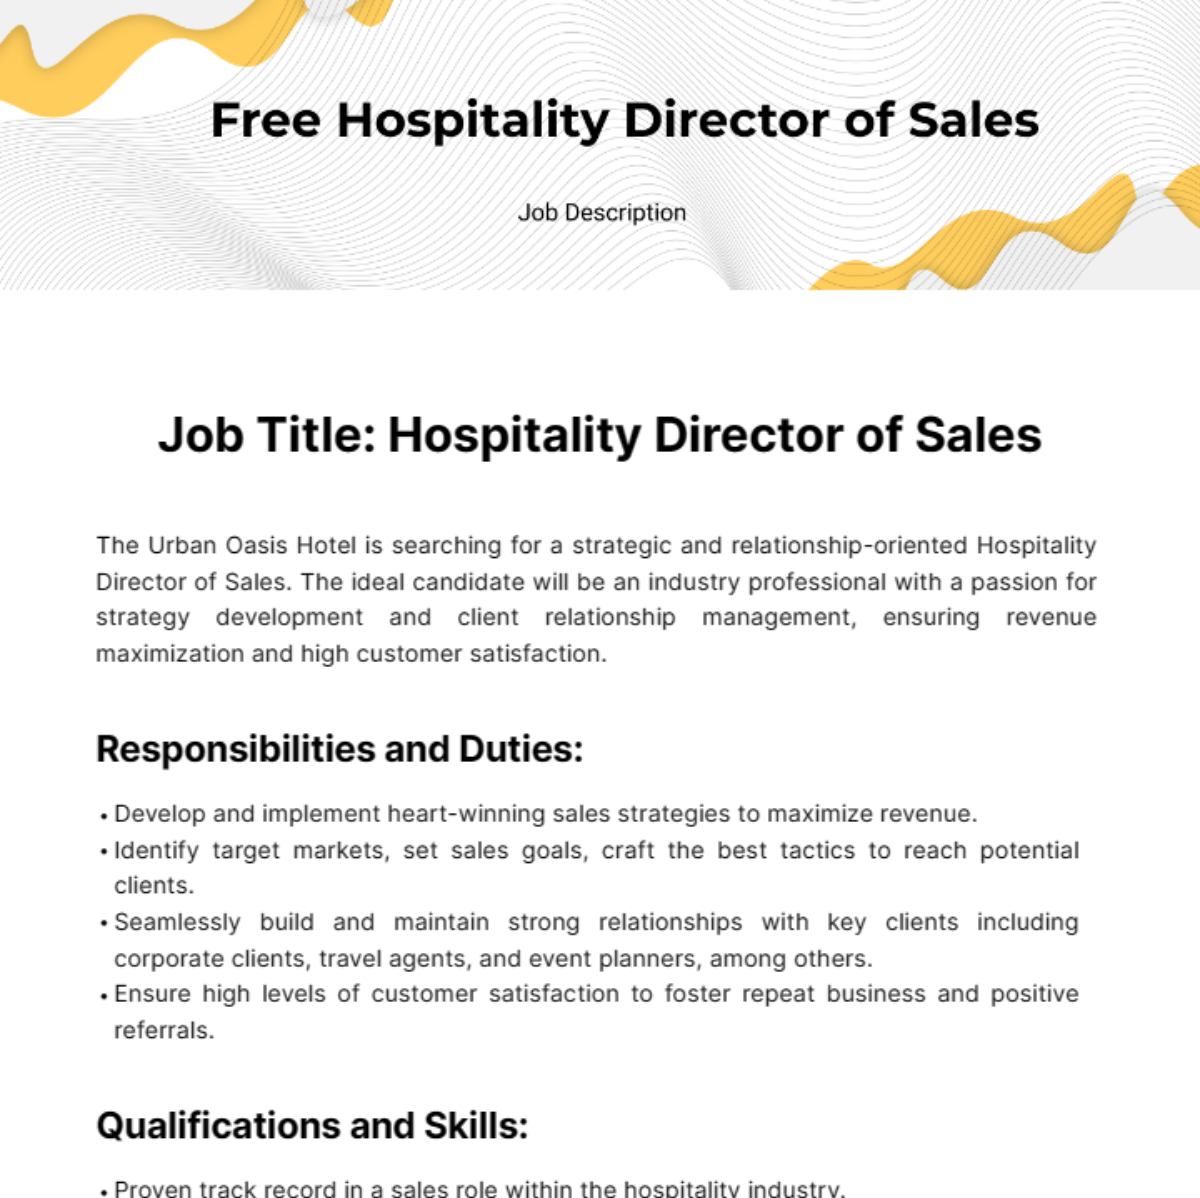 Free Hospitality Director of Sales Job Description Template